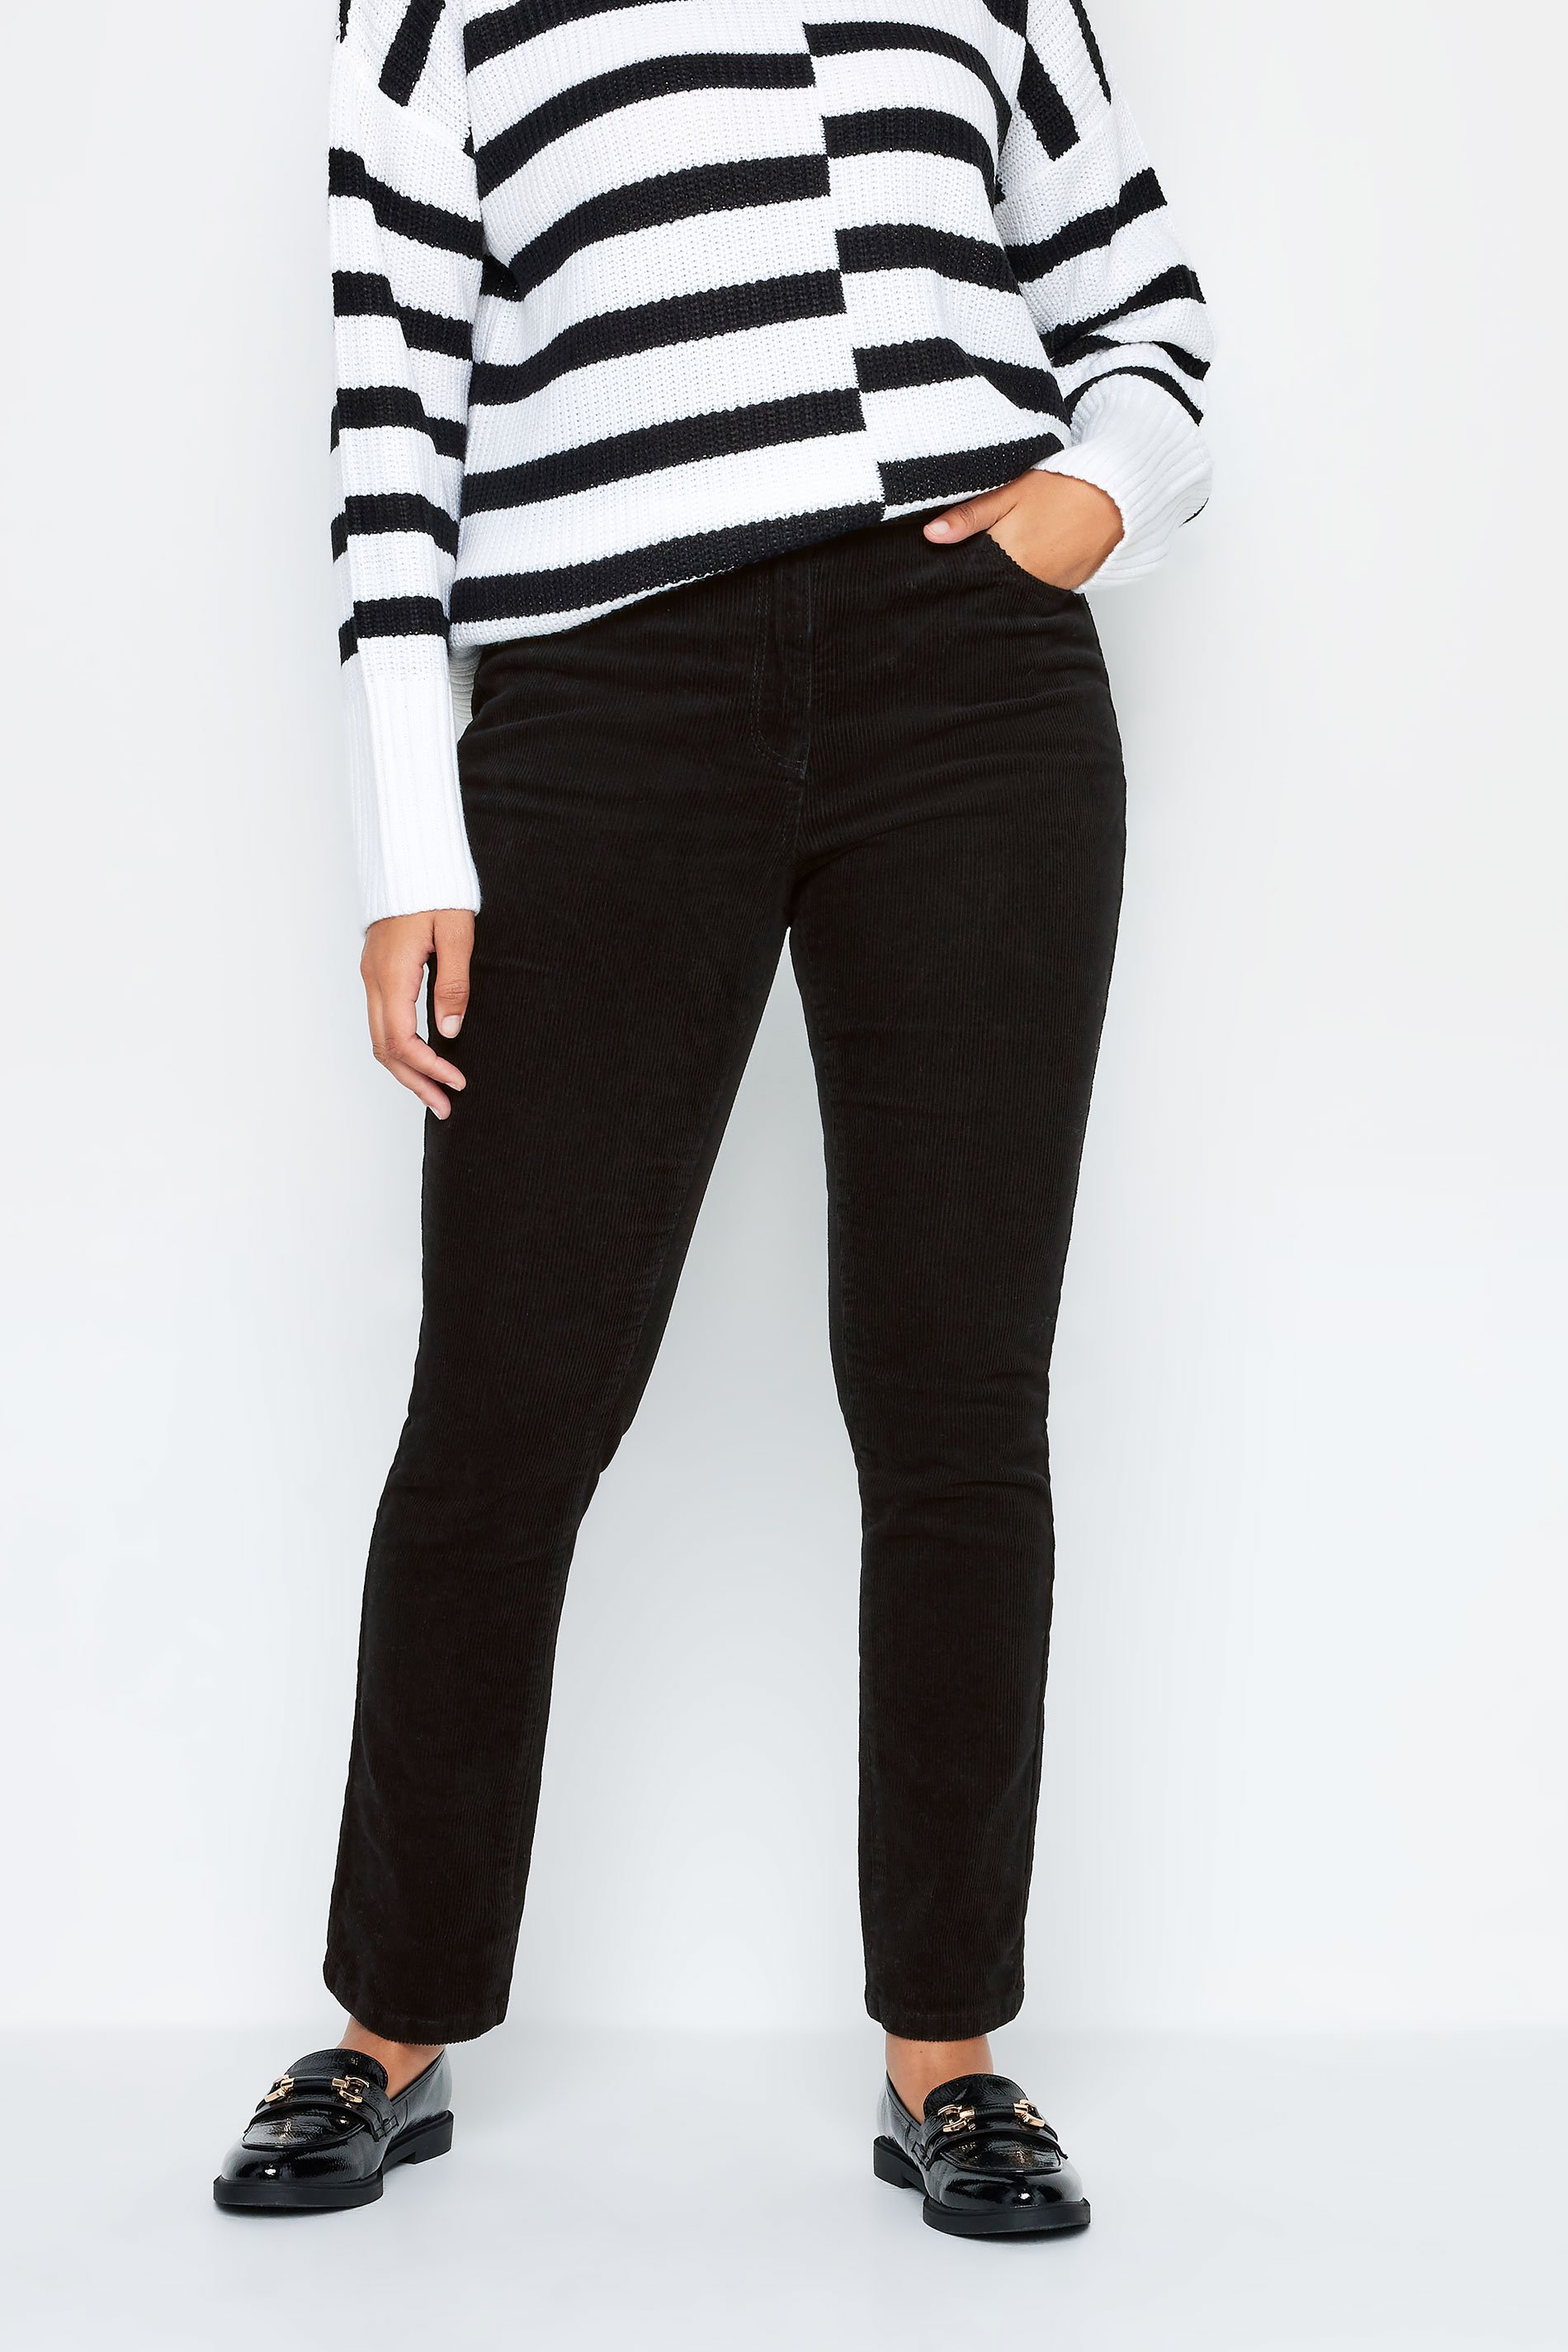 M&Co Black Straight Leg Cord Trousers | M&Co 1